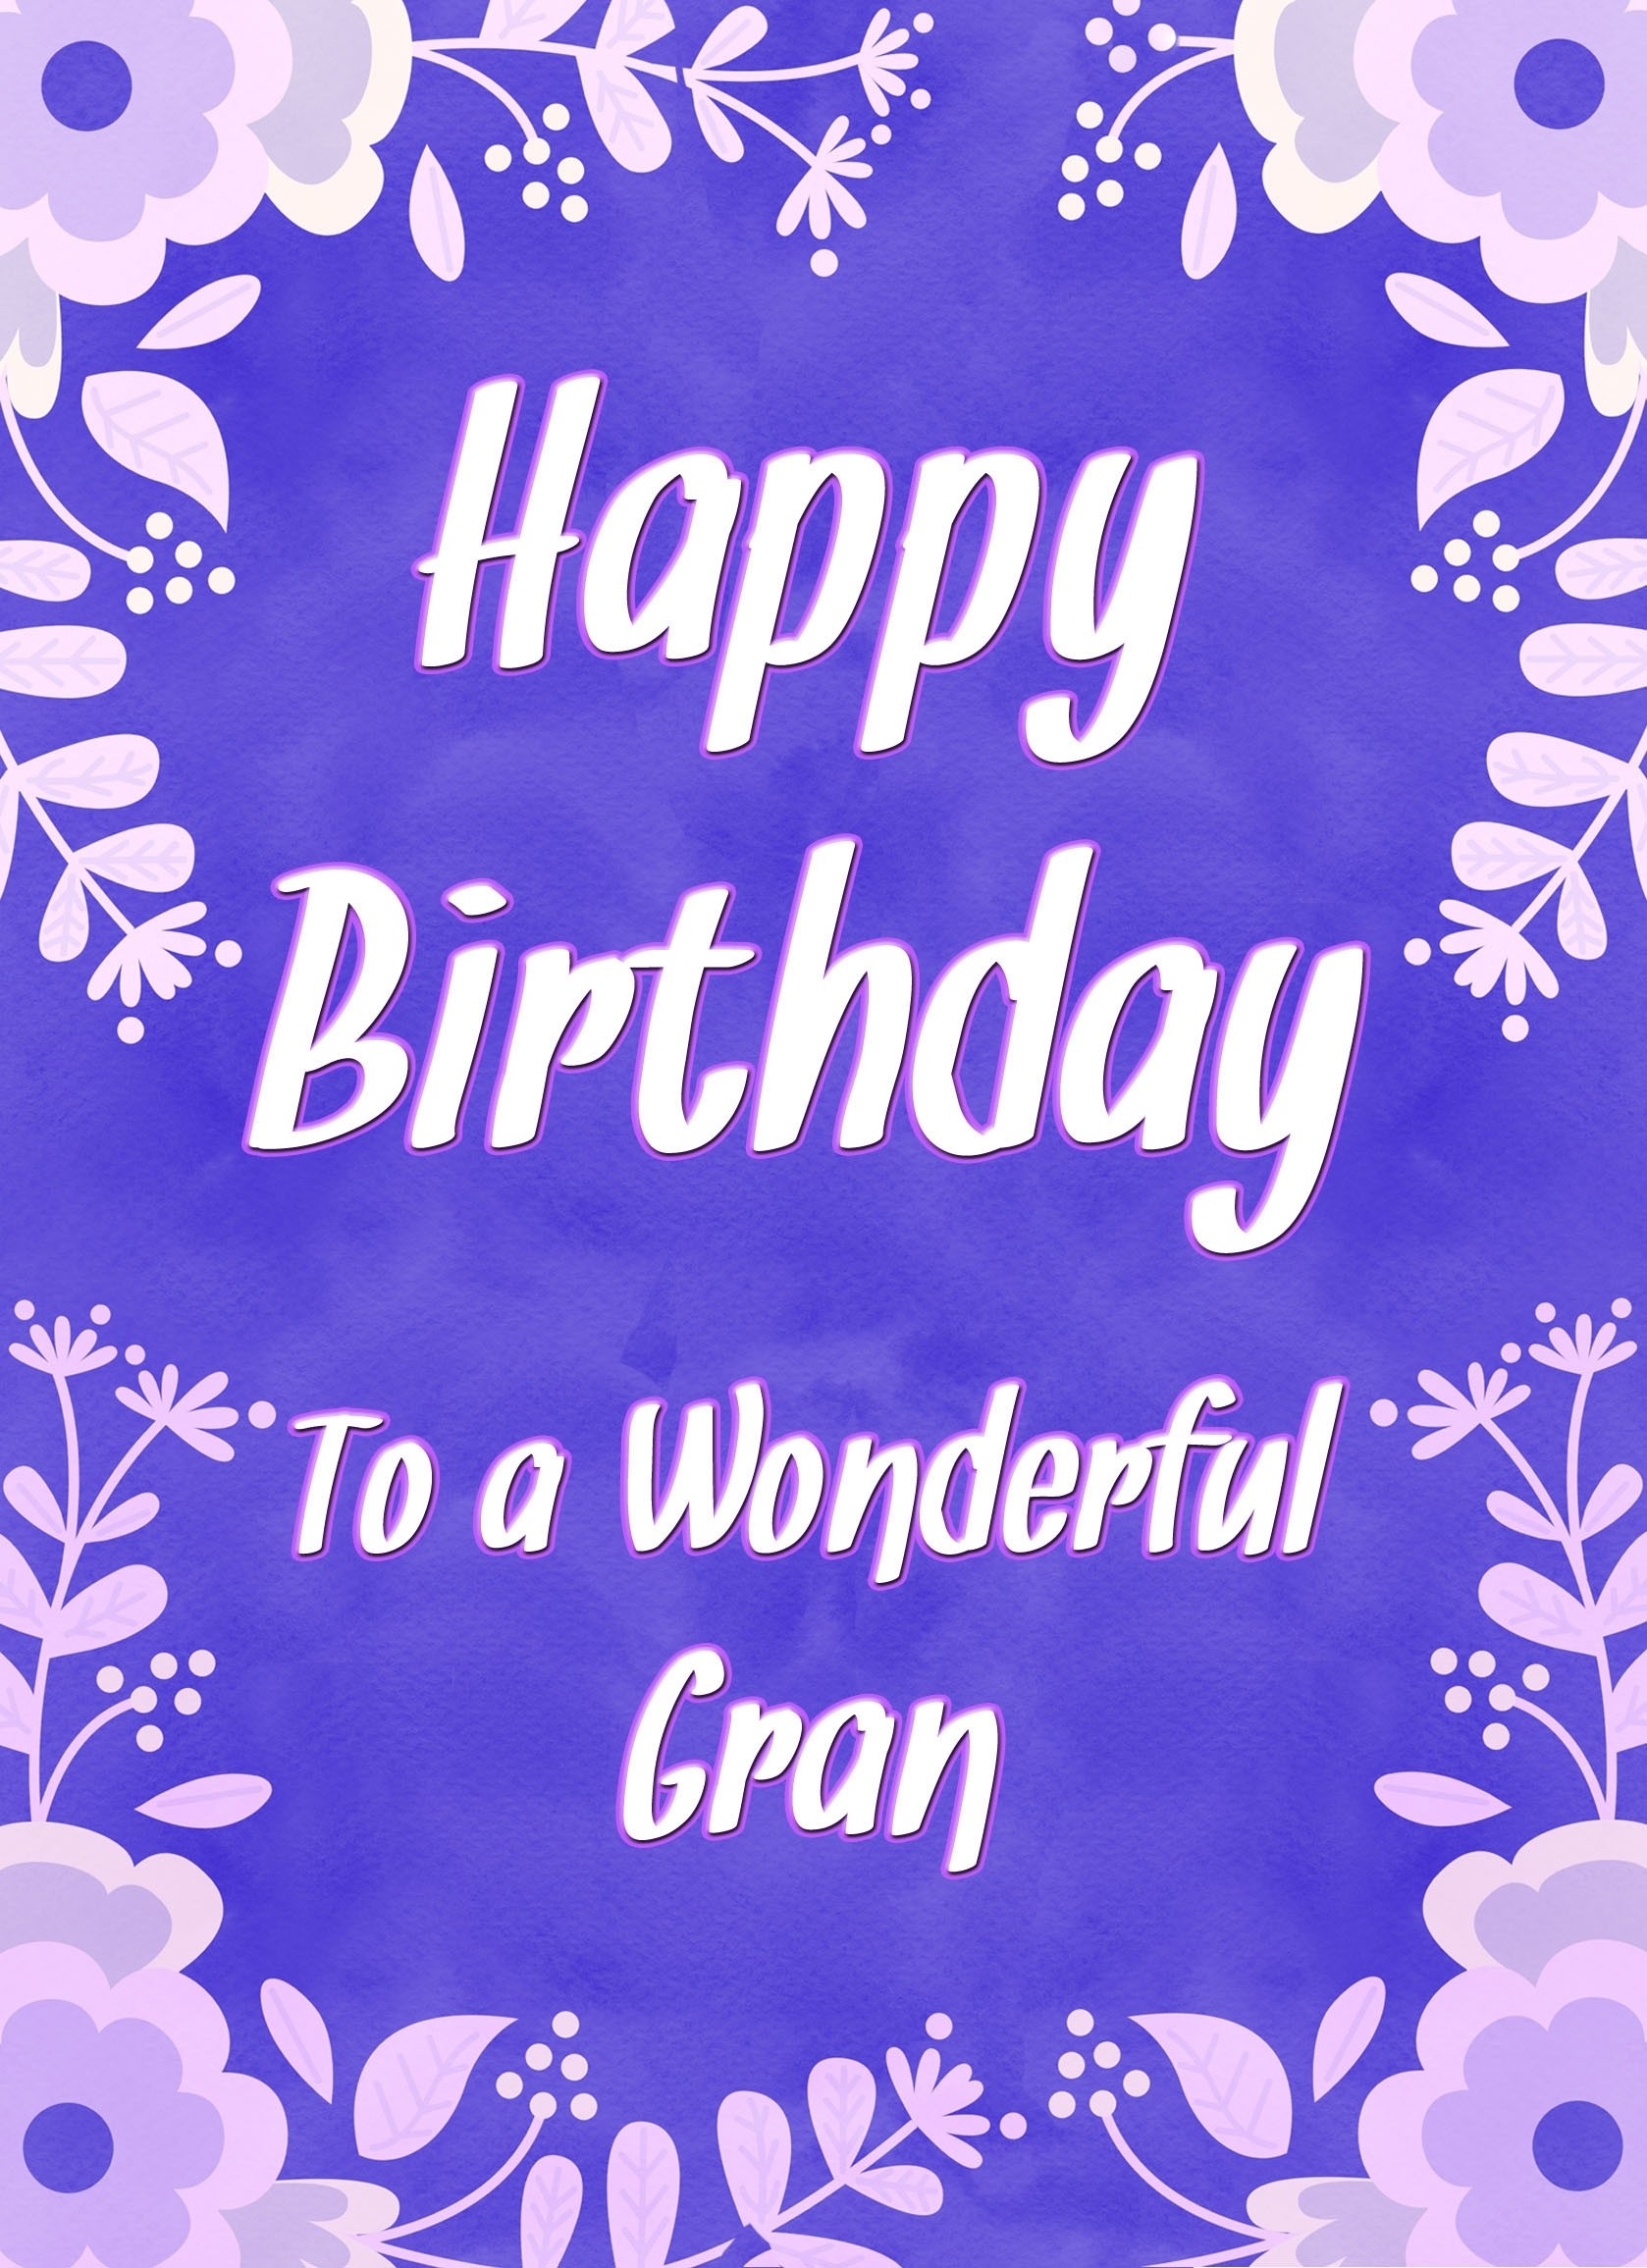 Birthday Card For Wonderful Gran (Purple Border)